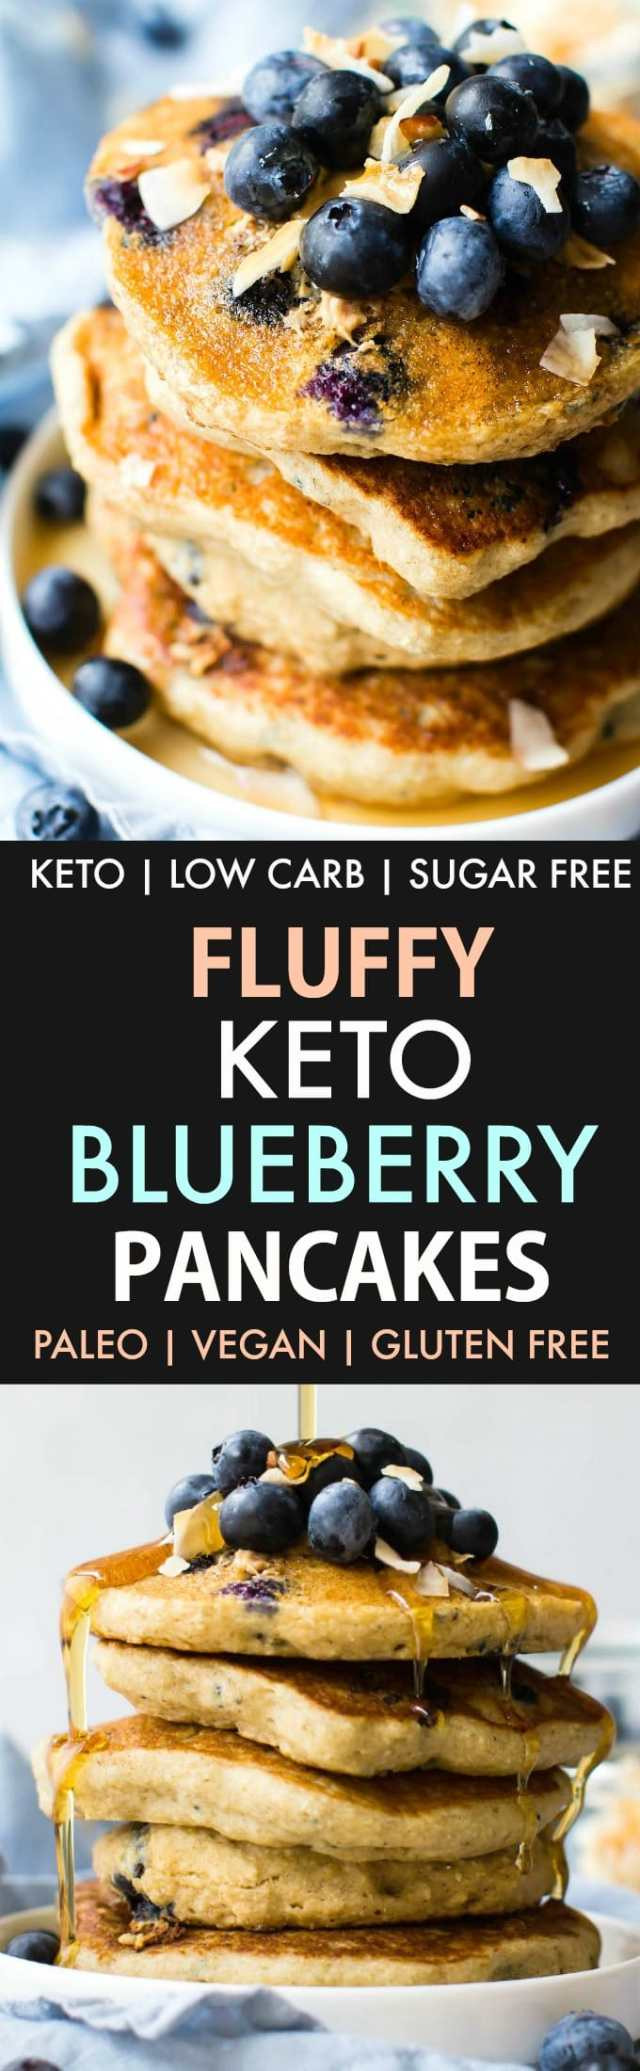 Keto Connect Pancakes
 Fluffy Low Carb Keto Blueberry Pancakes Paleo Vegan